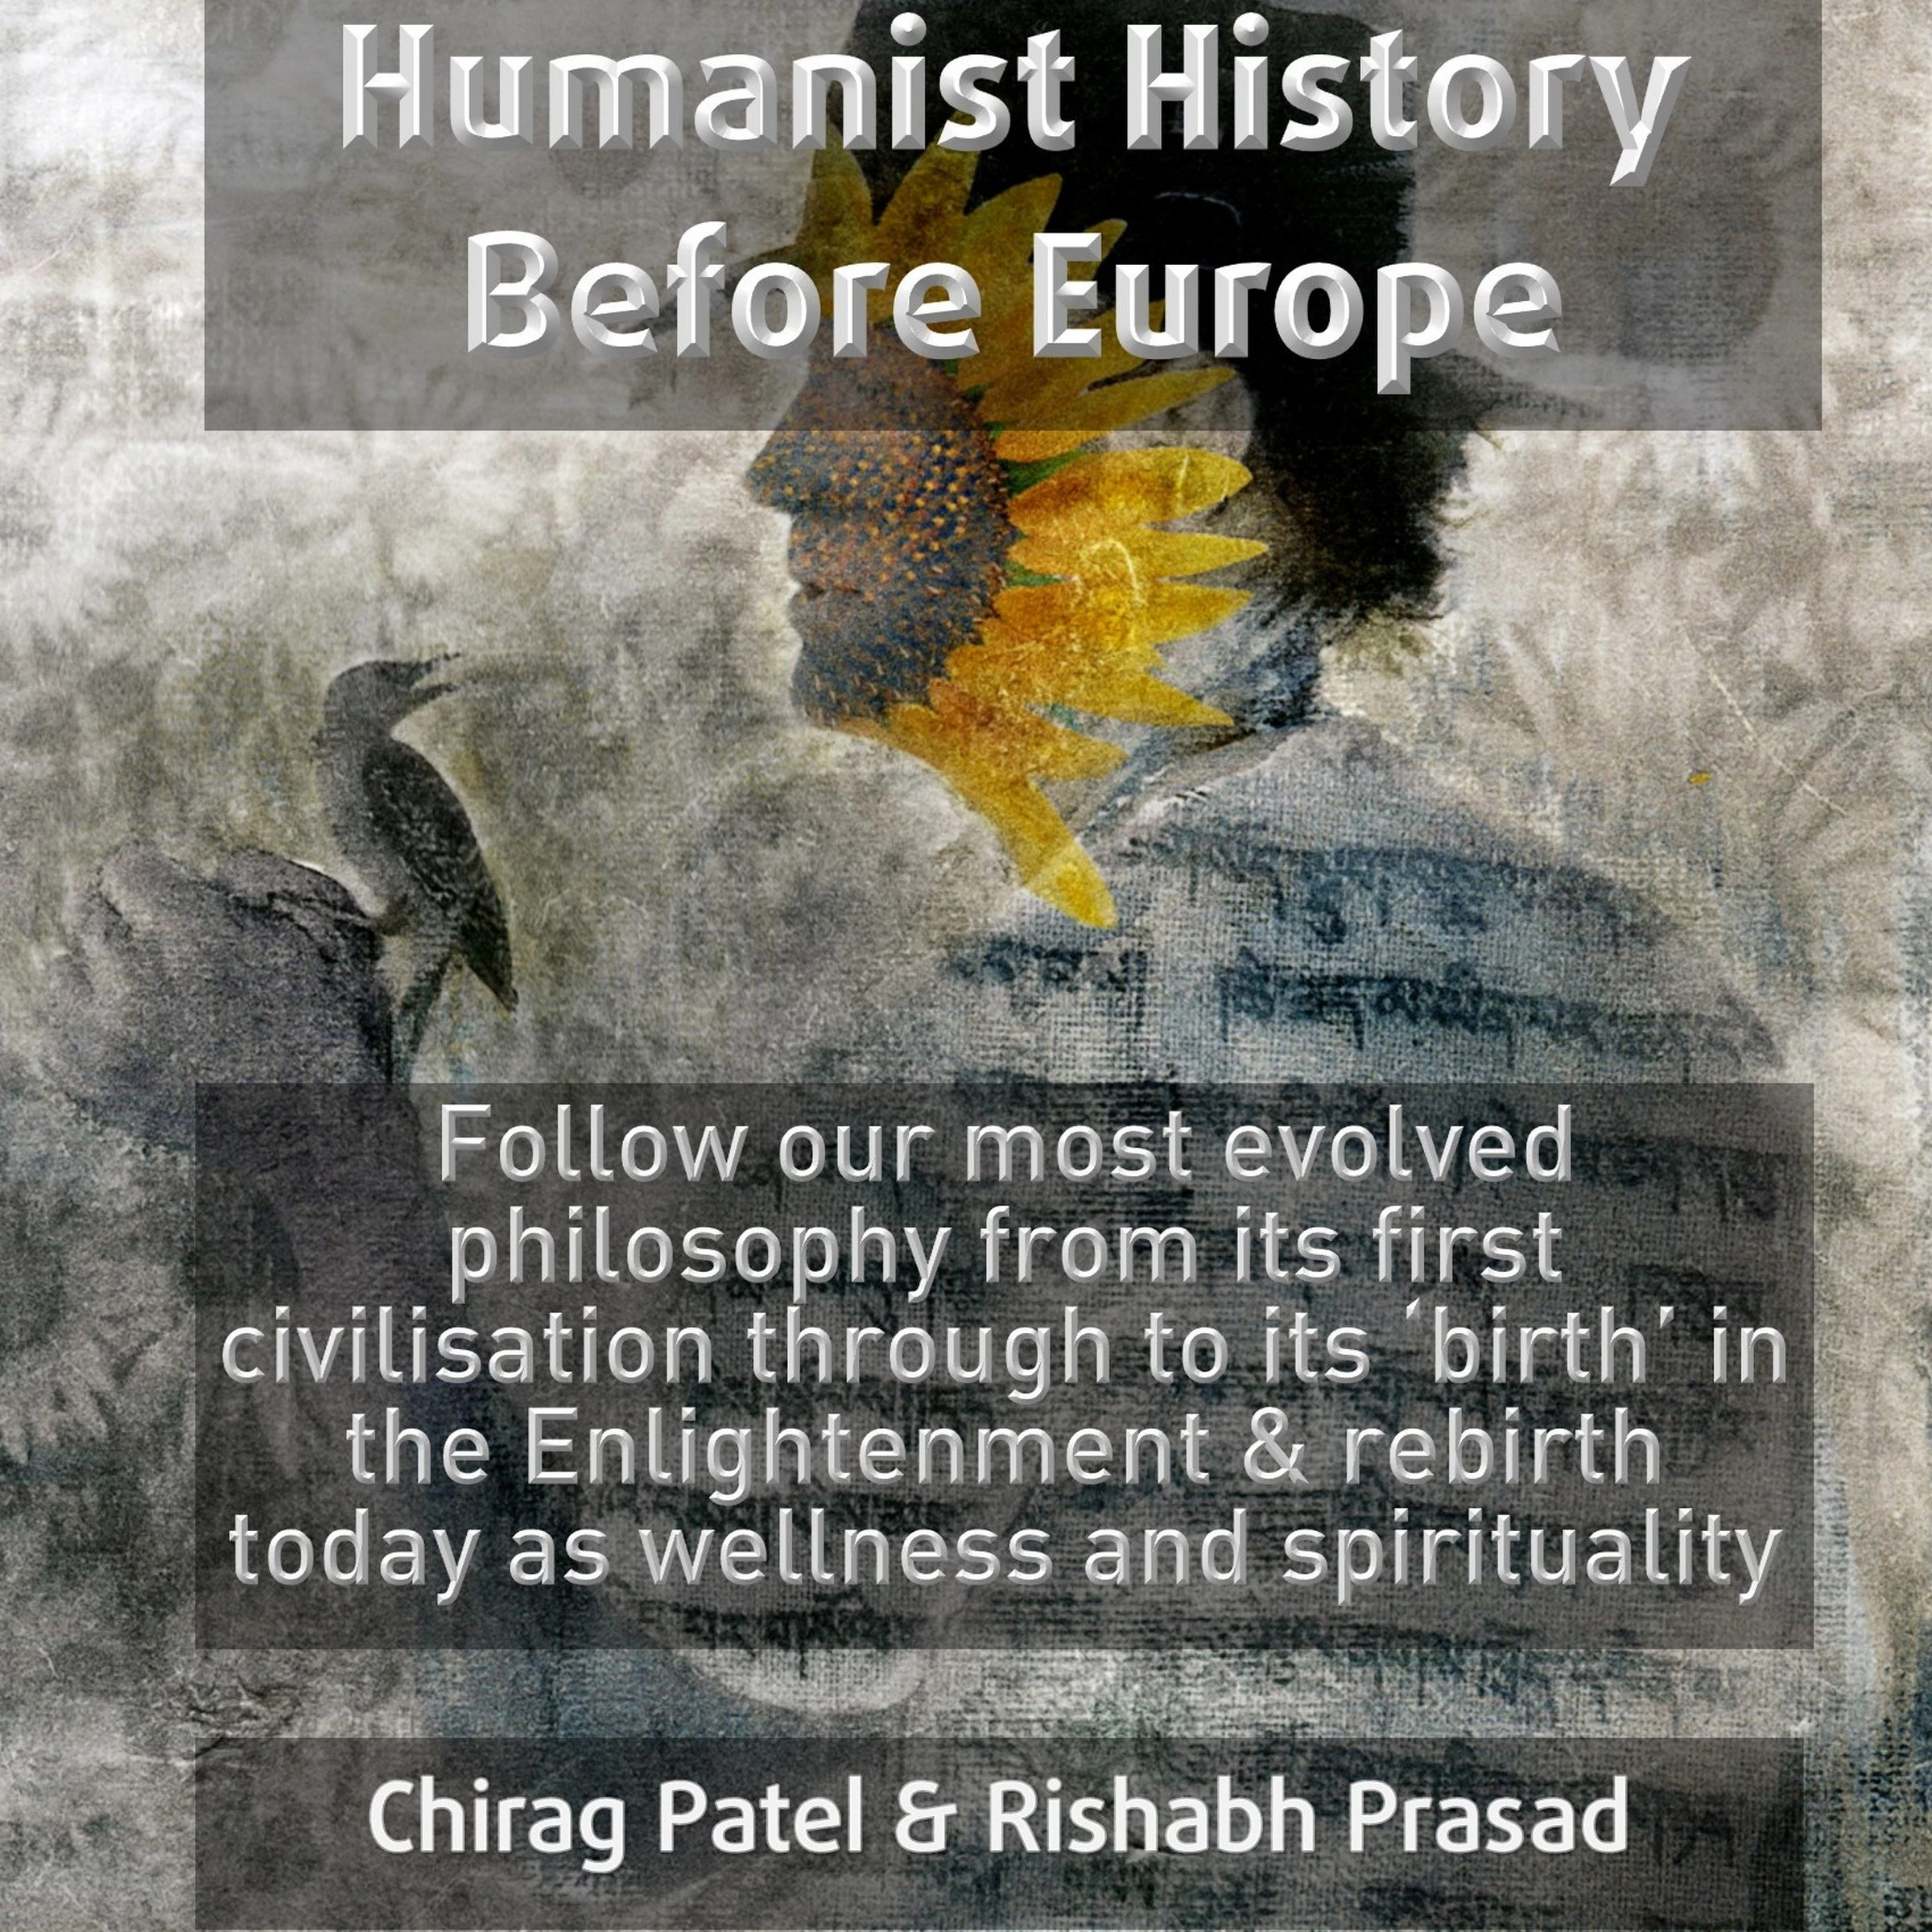 Humanist History Before Europe Audiobook by Chirag Patel & Rishabh Prasad